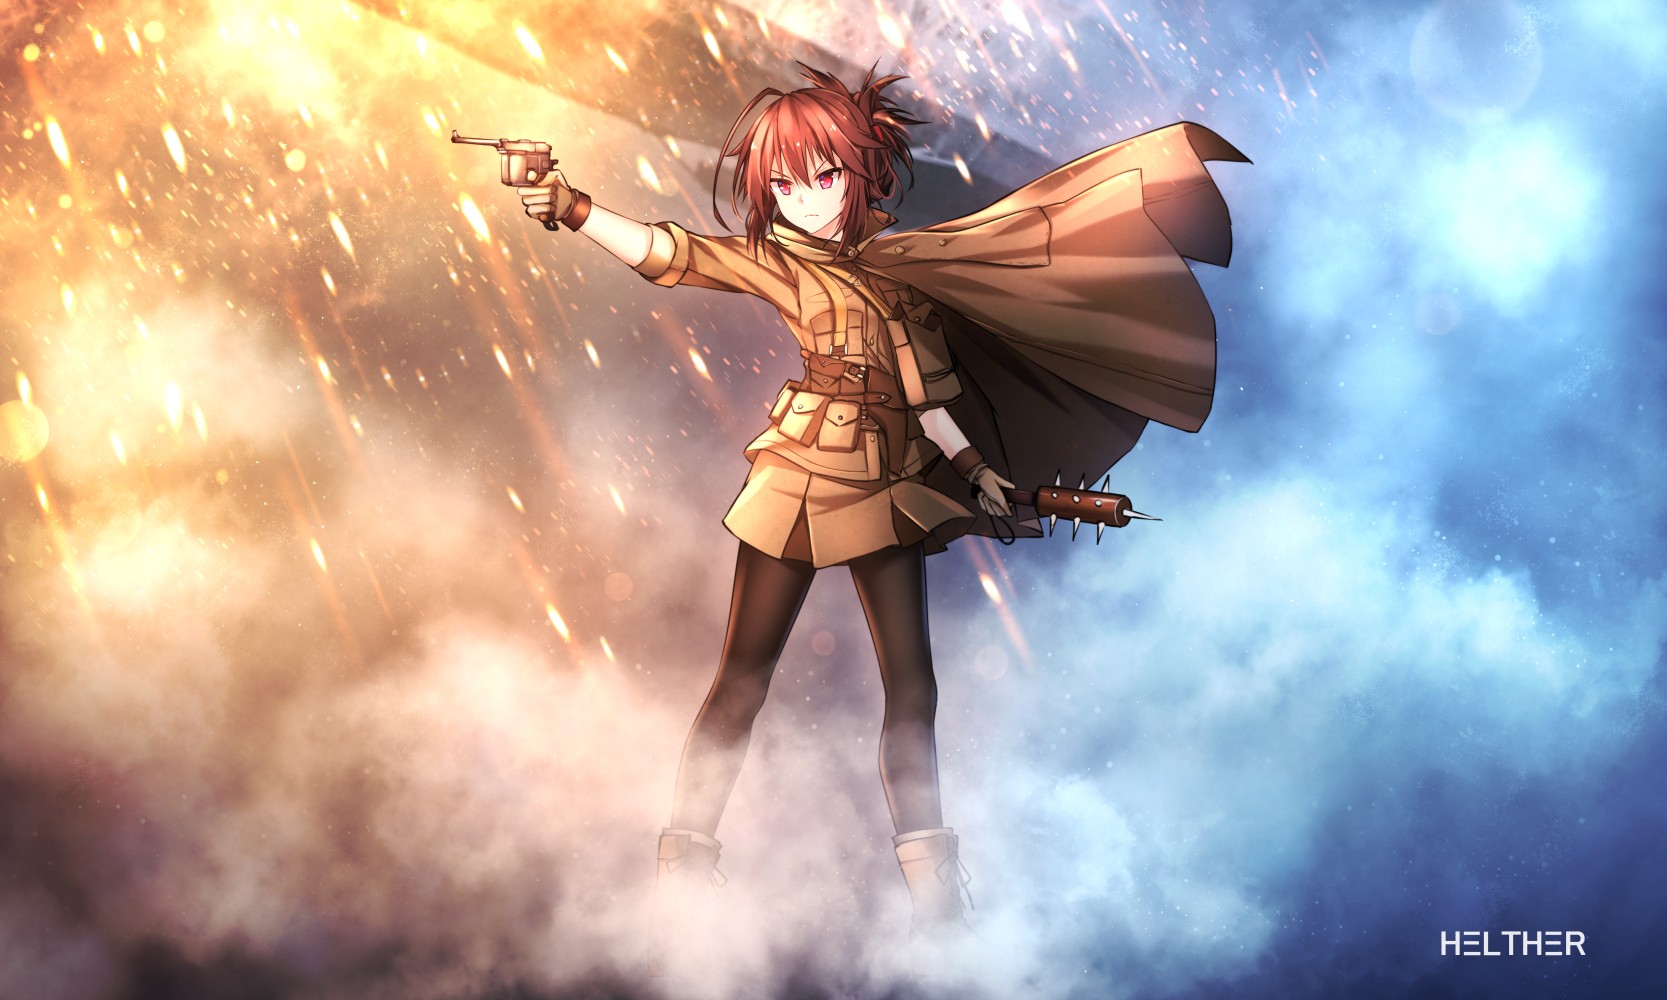 Anime 1667x1000 anime anime girls Battlefield 1 Battlefield (game) boots brunette gun red eyes uniform skirt weapon short hair